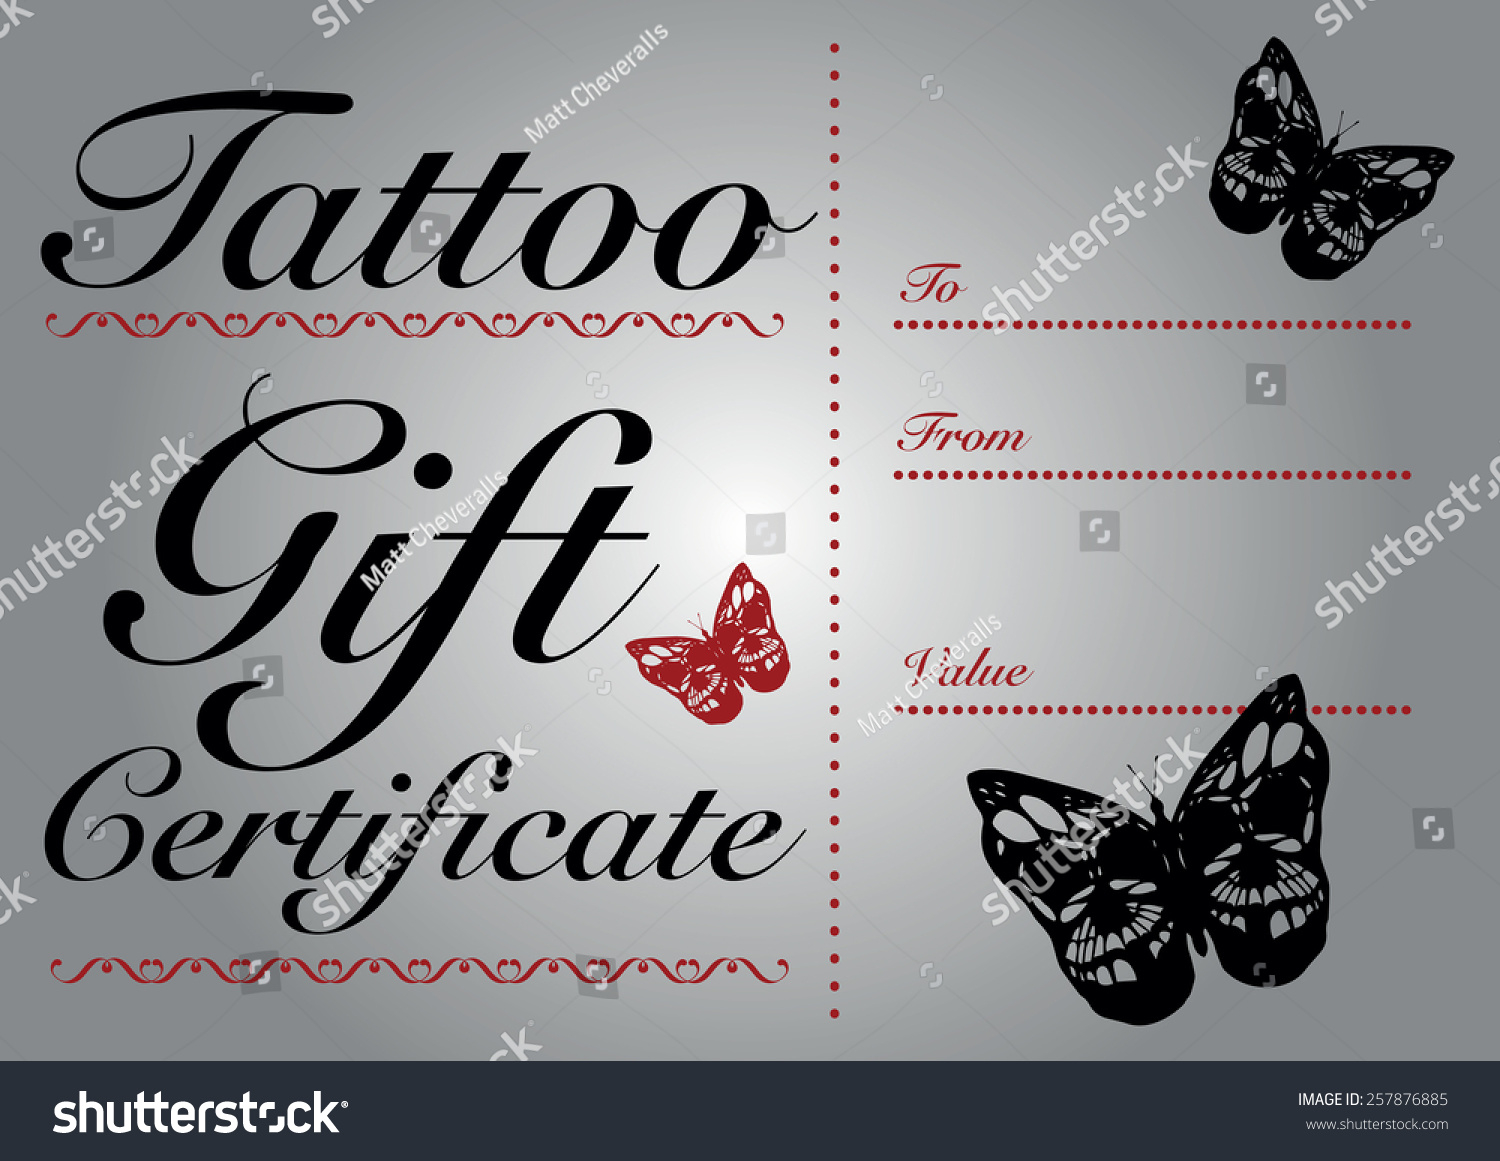 Butterfly Skull Tattoo Gift Card Gift: Stock Vektorgrafik  Throughout Tattoo Gift Certificate Template